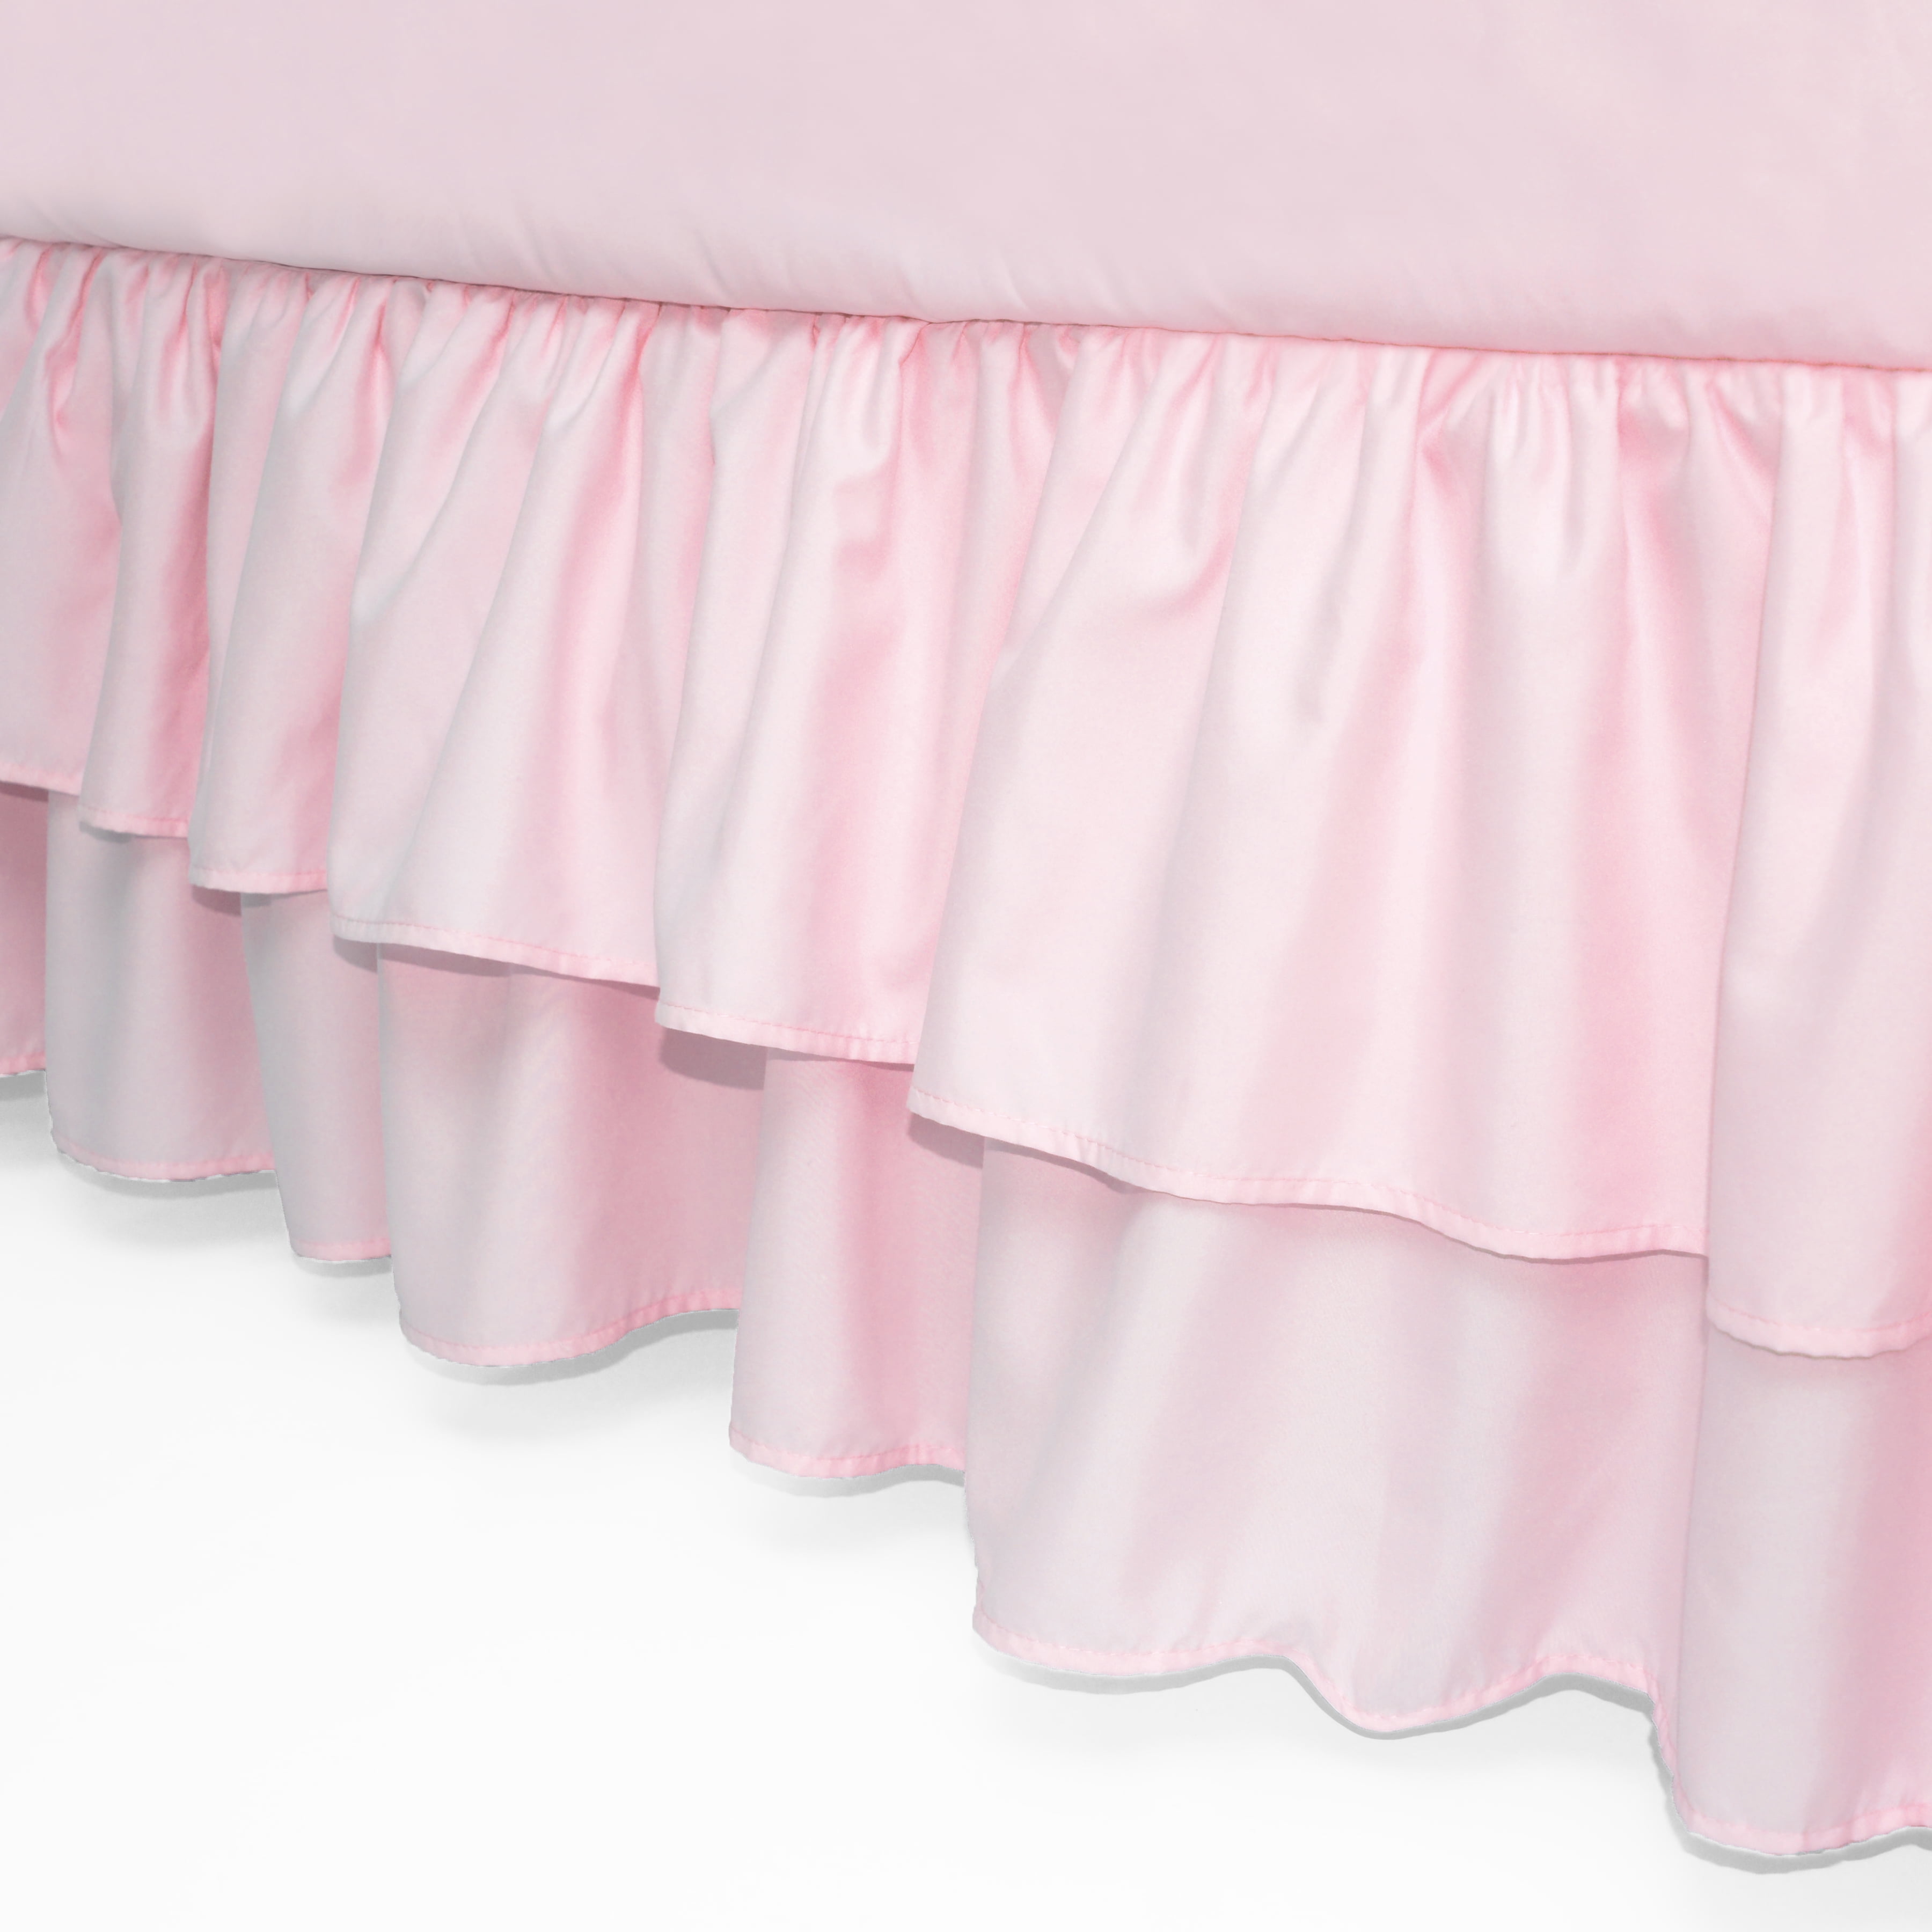 Gorgeous Dust Ruffle Chic Blush Pink Ruffle Crib Skirt for Baby Girl Nursery 